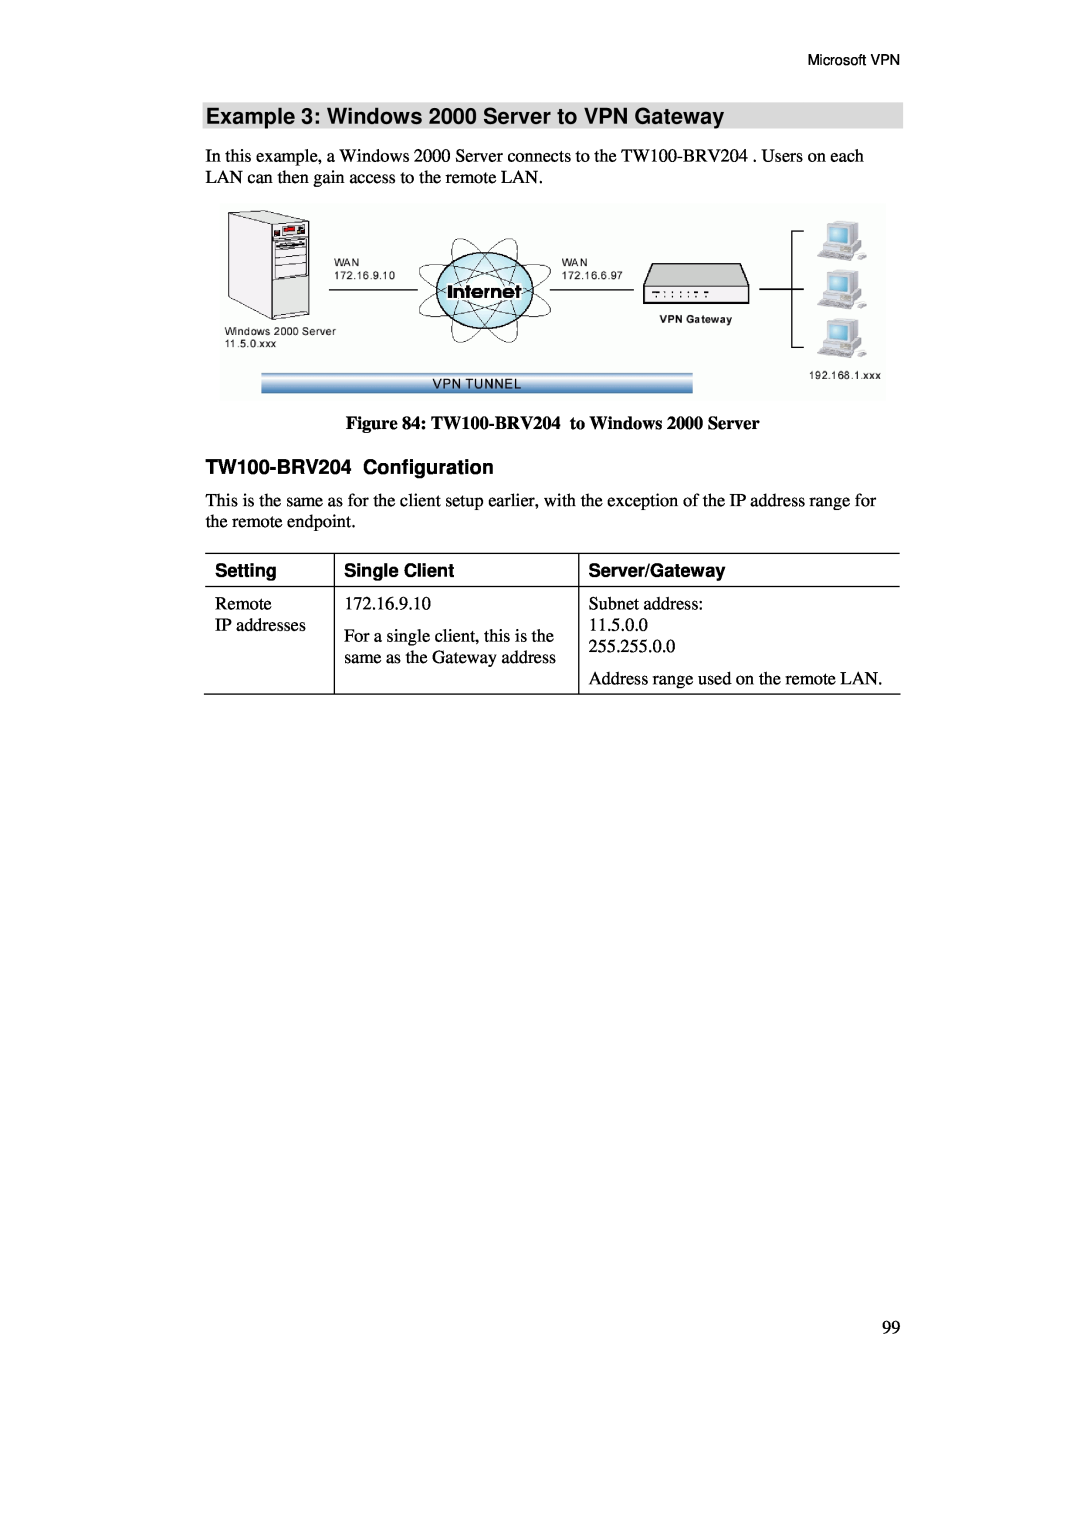 TRENDnet Example 3 Windows 2000 Server to VPN Gateway, TW100-BRV204 to Windows 2000 Server, Setting, Single Client 